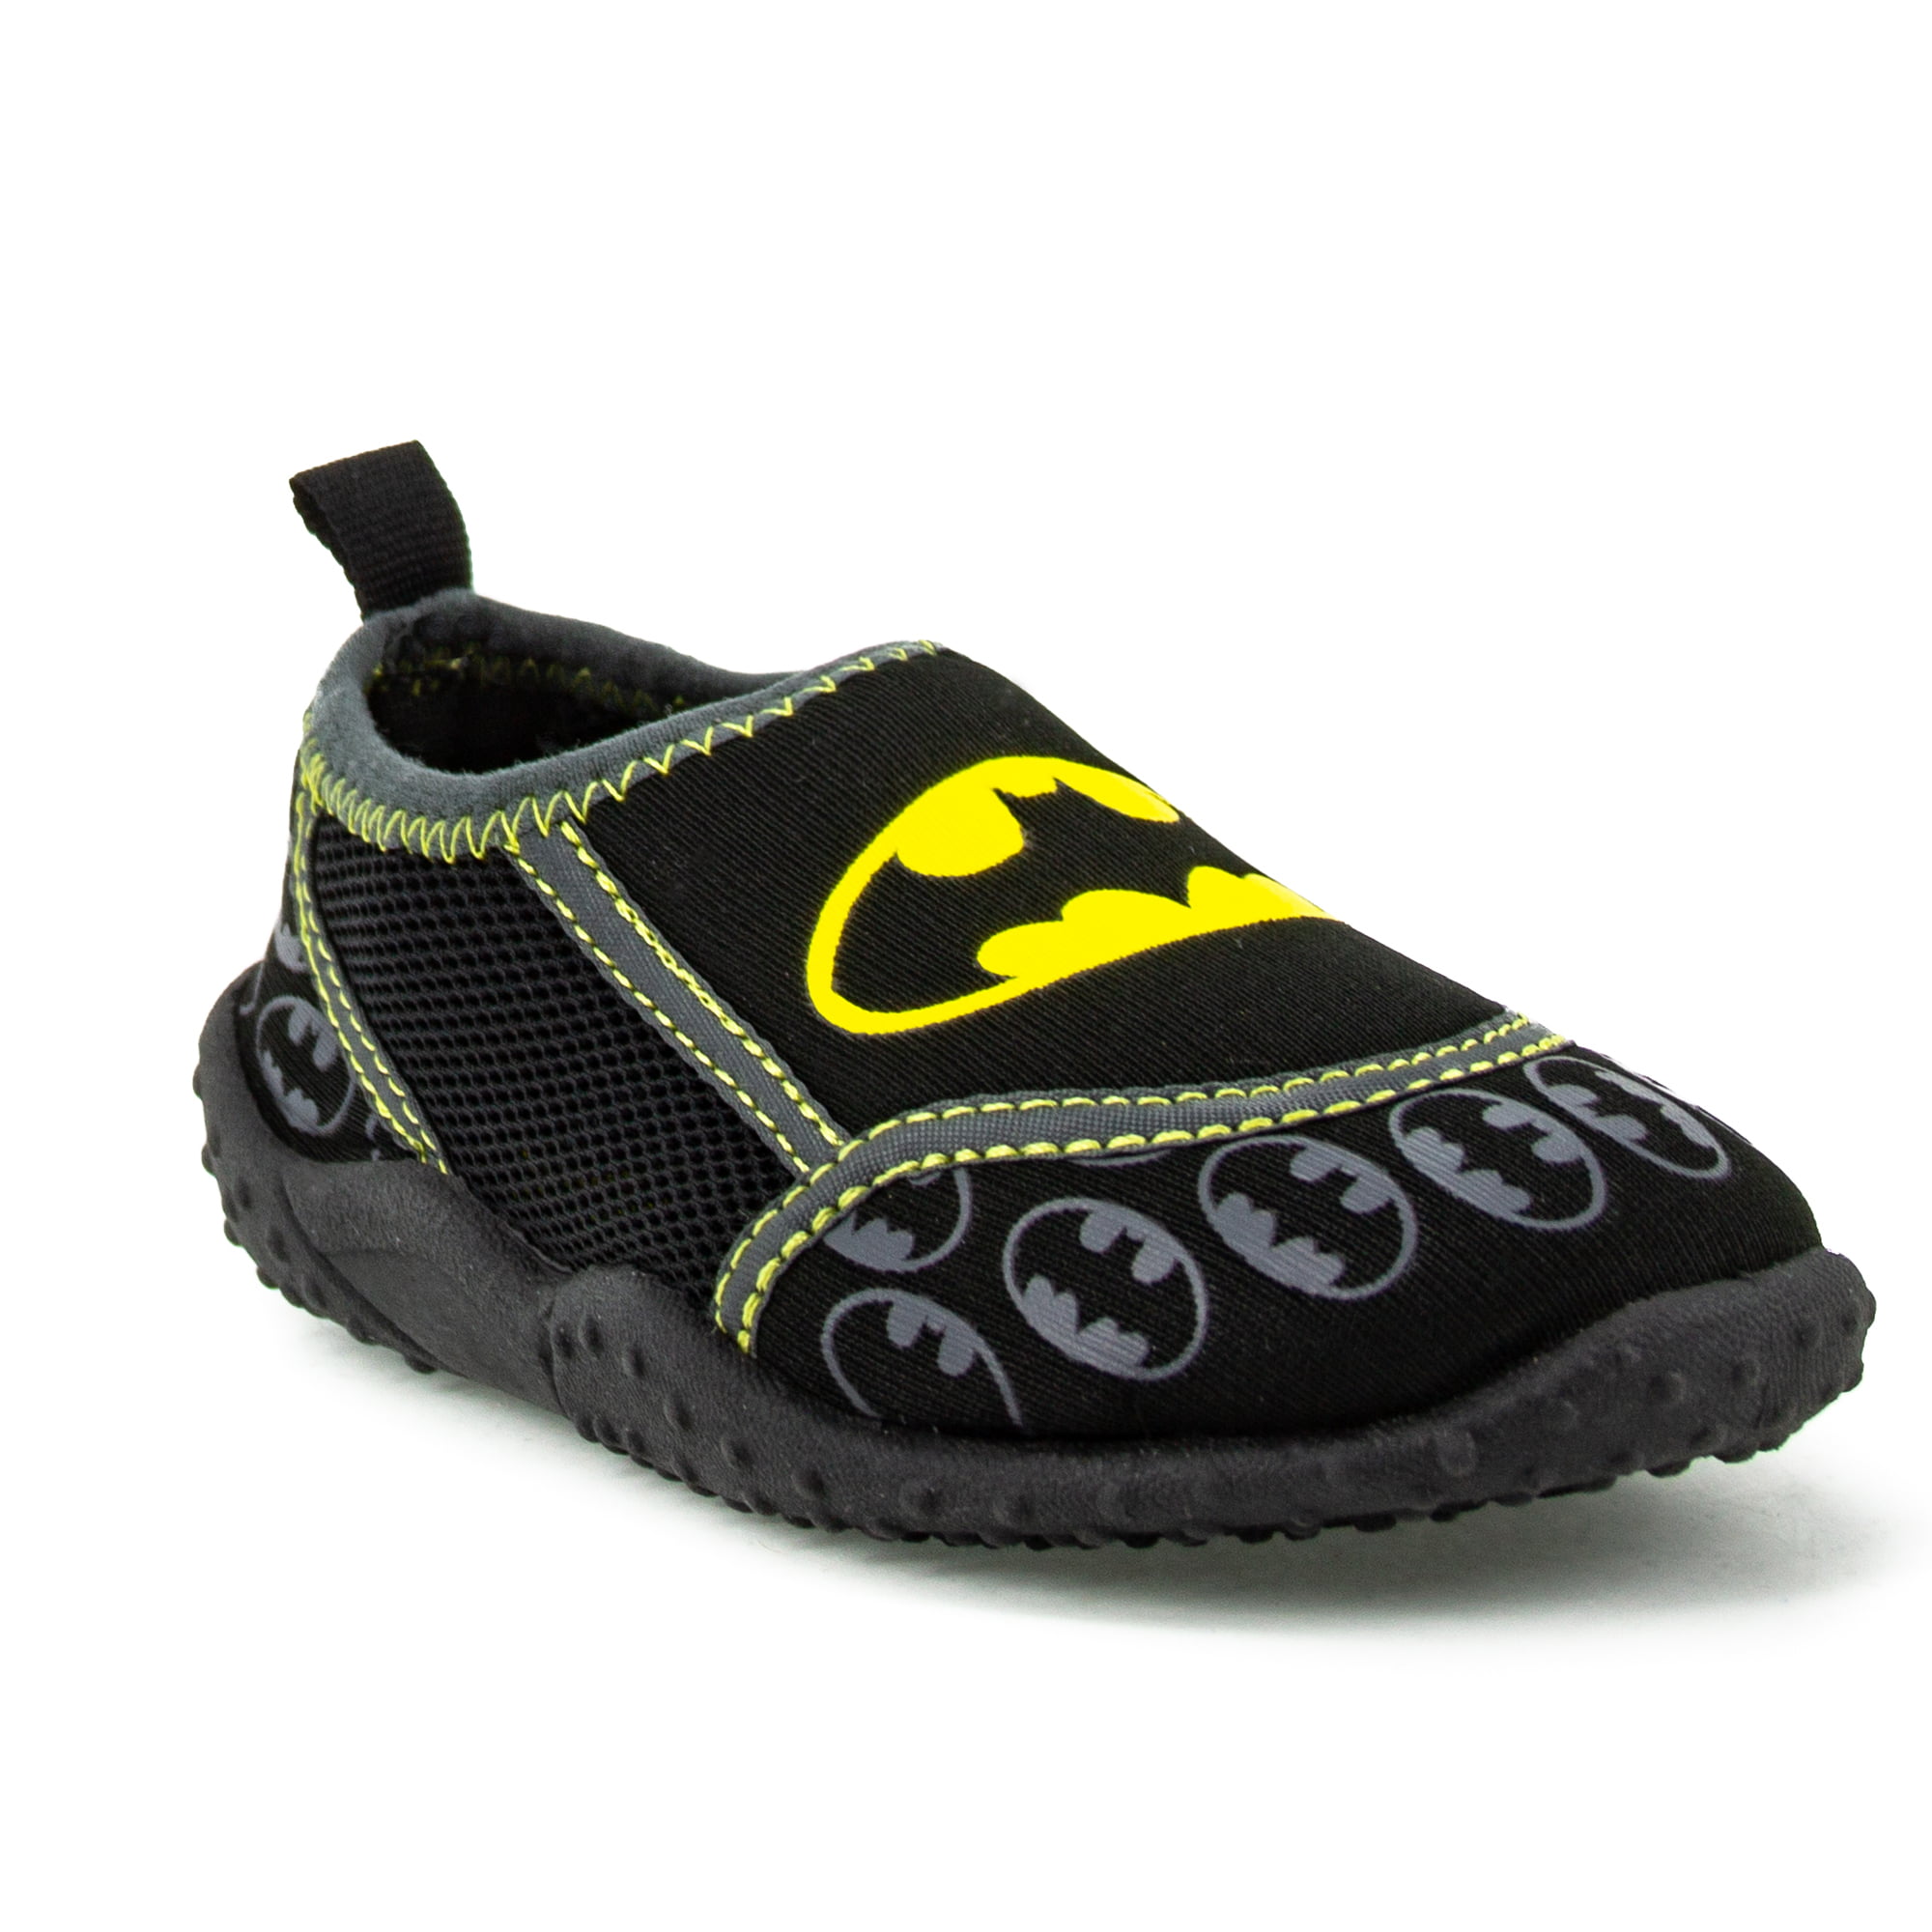 batman water shoes